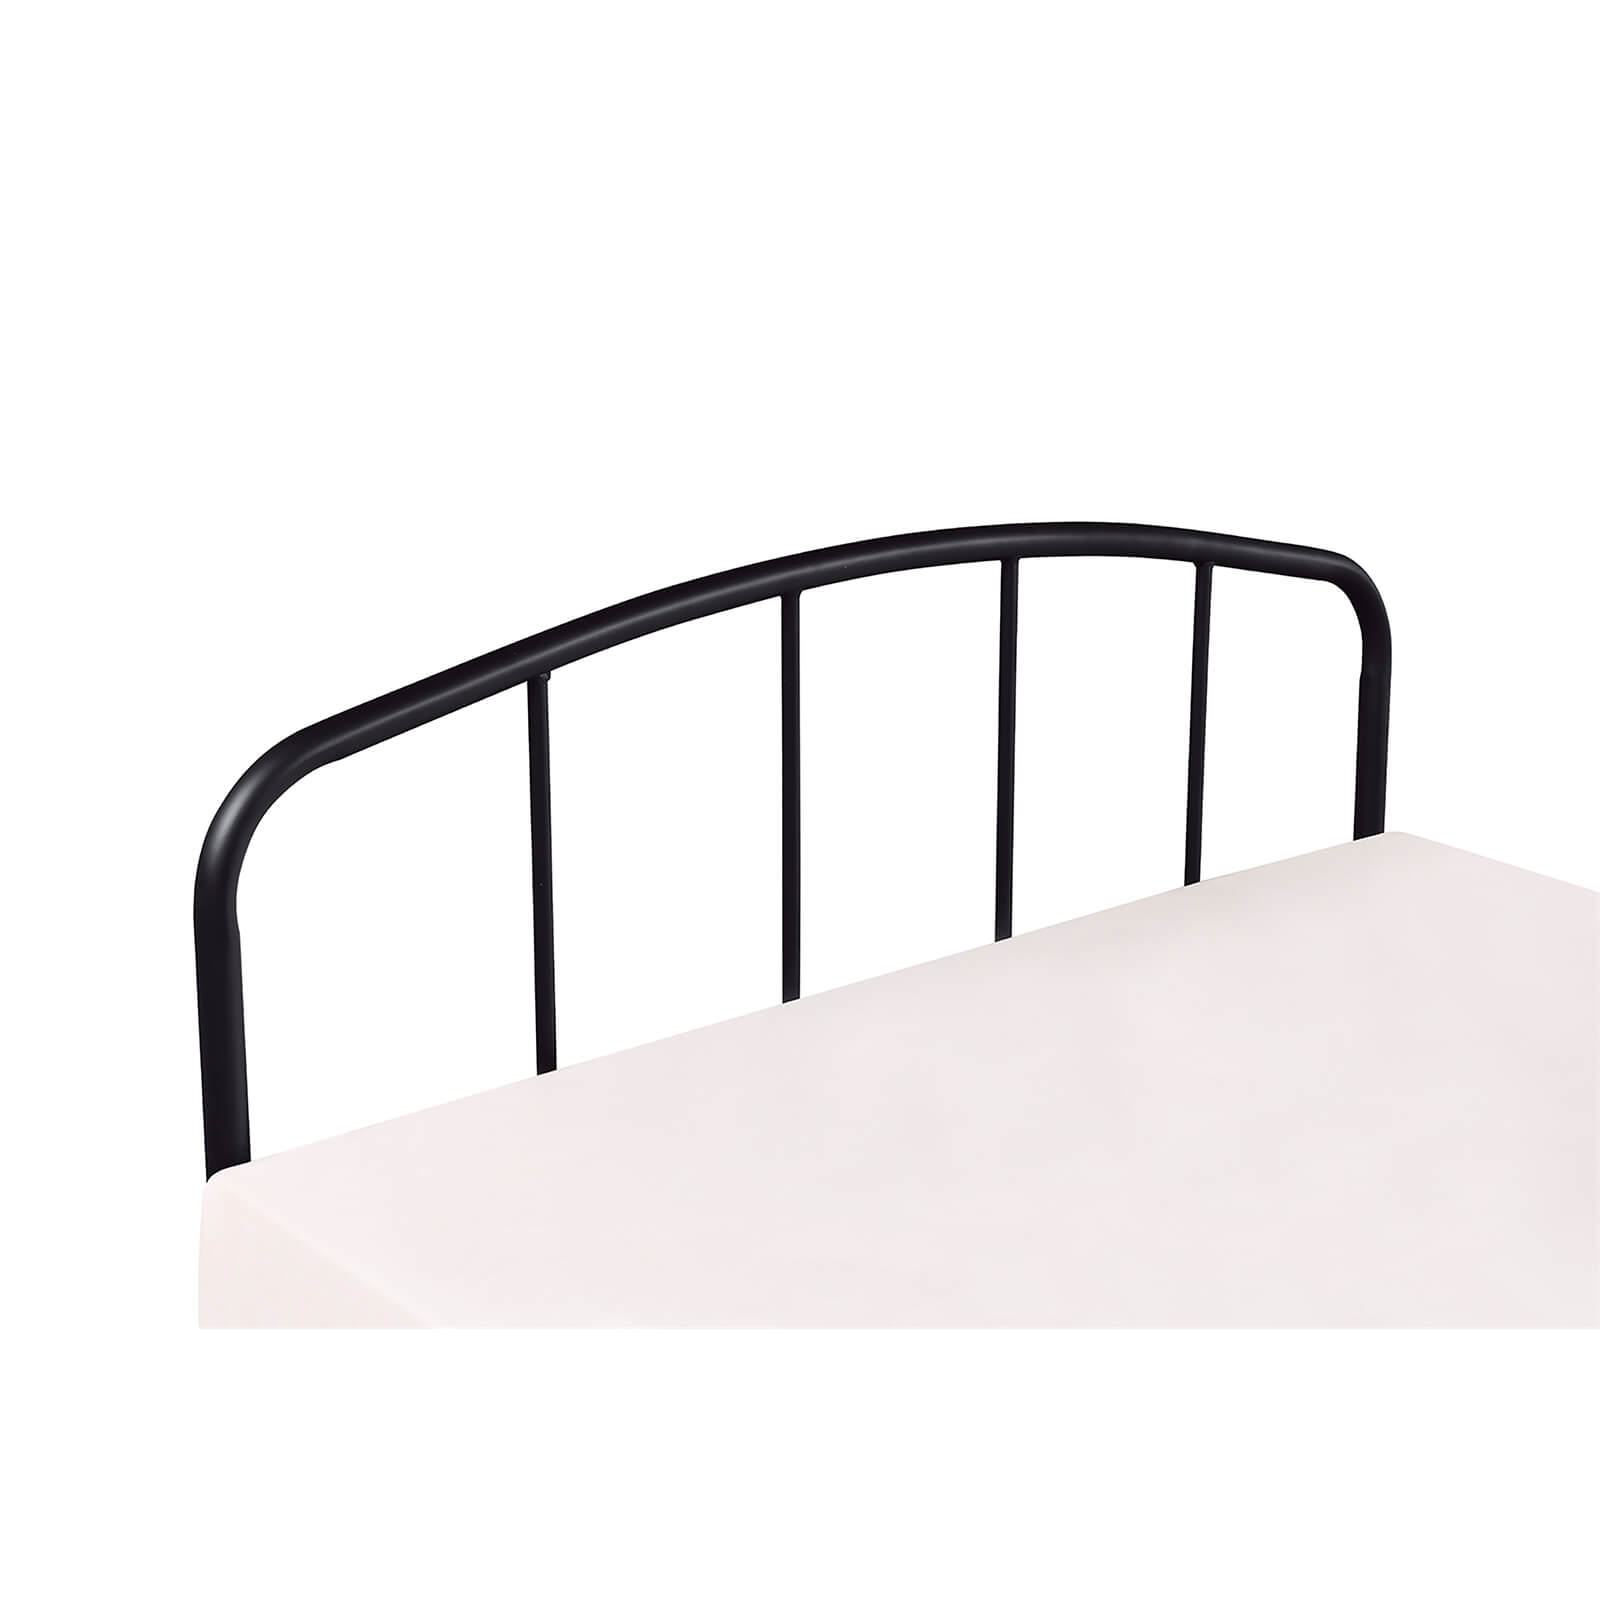 Milton Double Bed Frame - Black